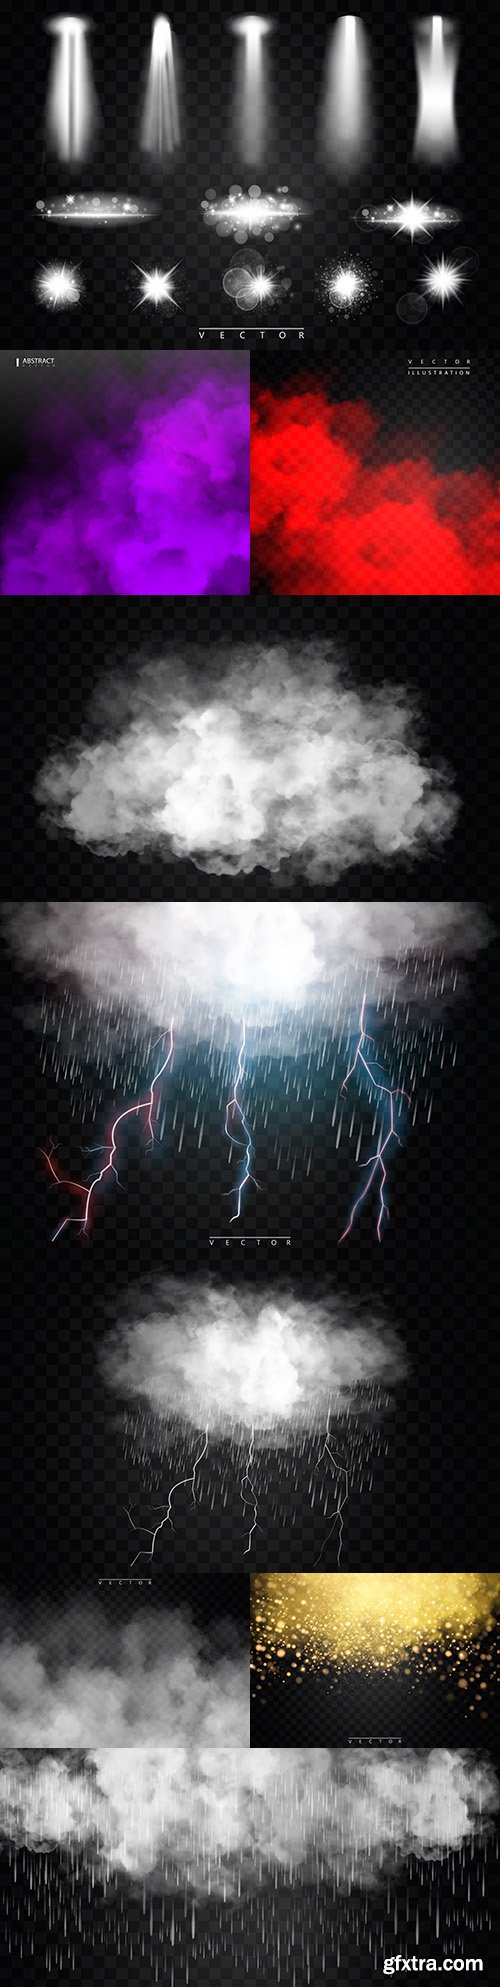 Rain, fog and lightning collection natural phenomena